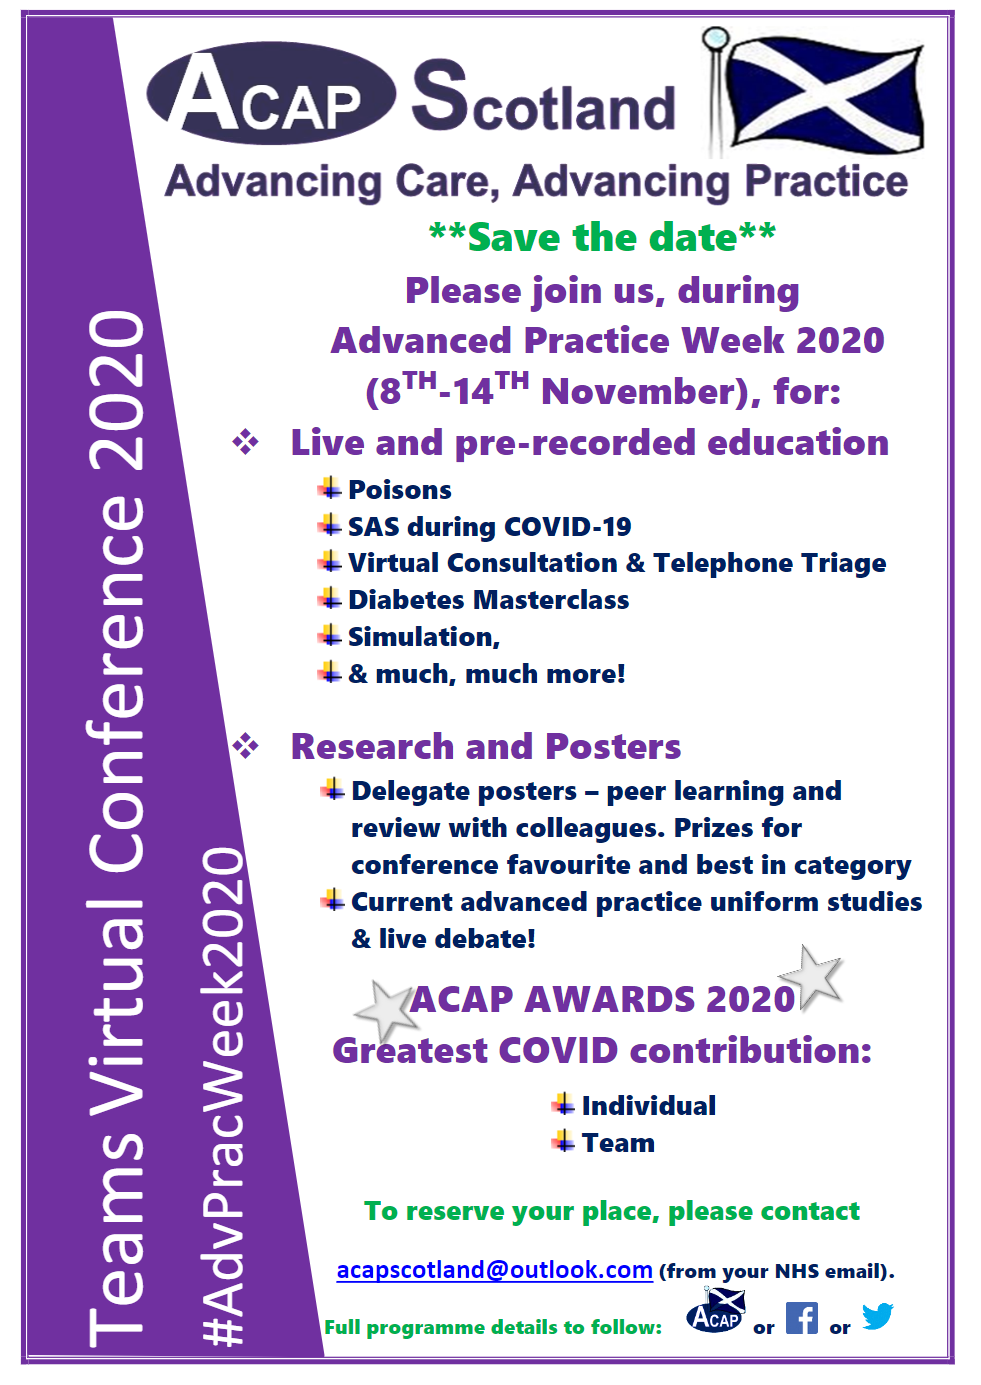 ACAP Conference 2020 ACAP Scotland